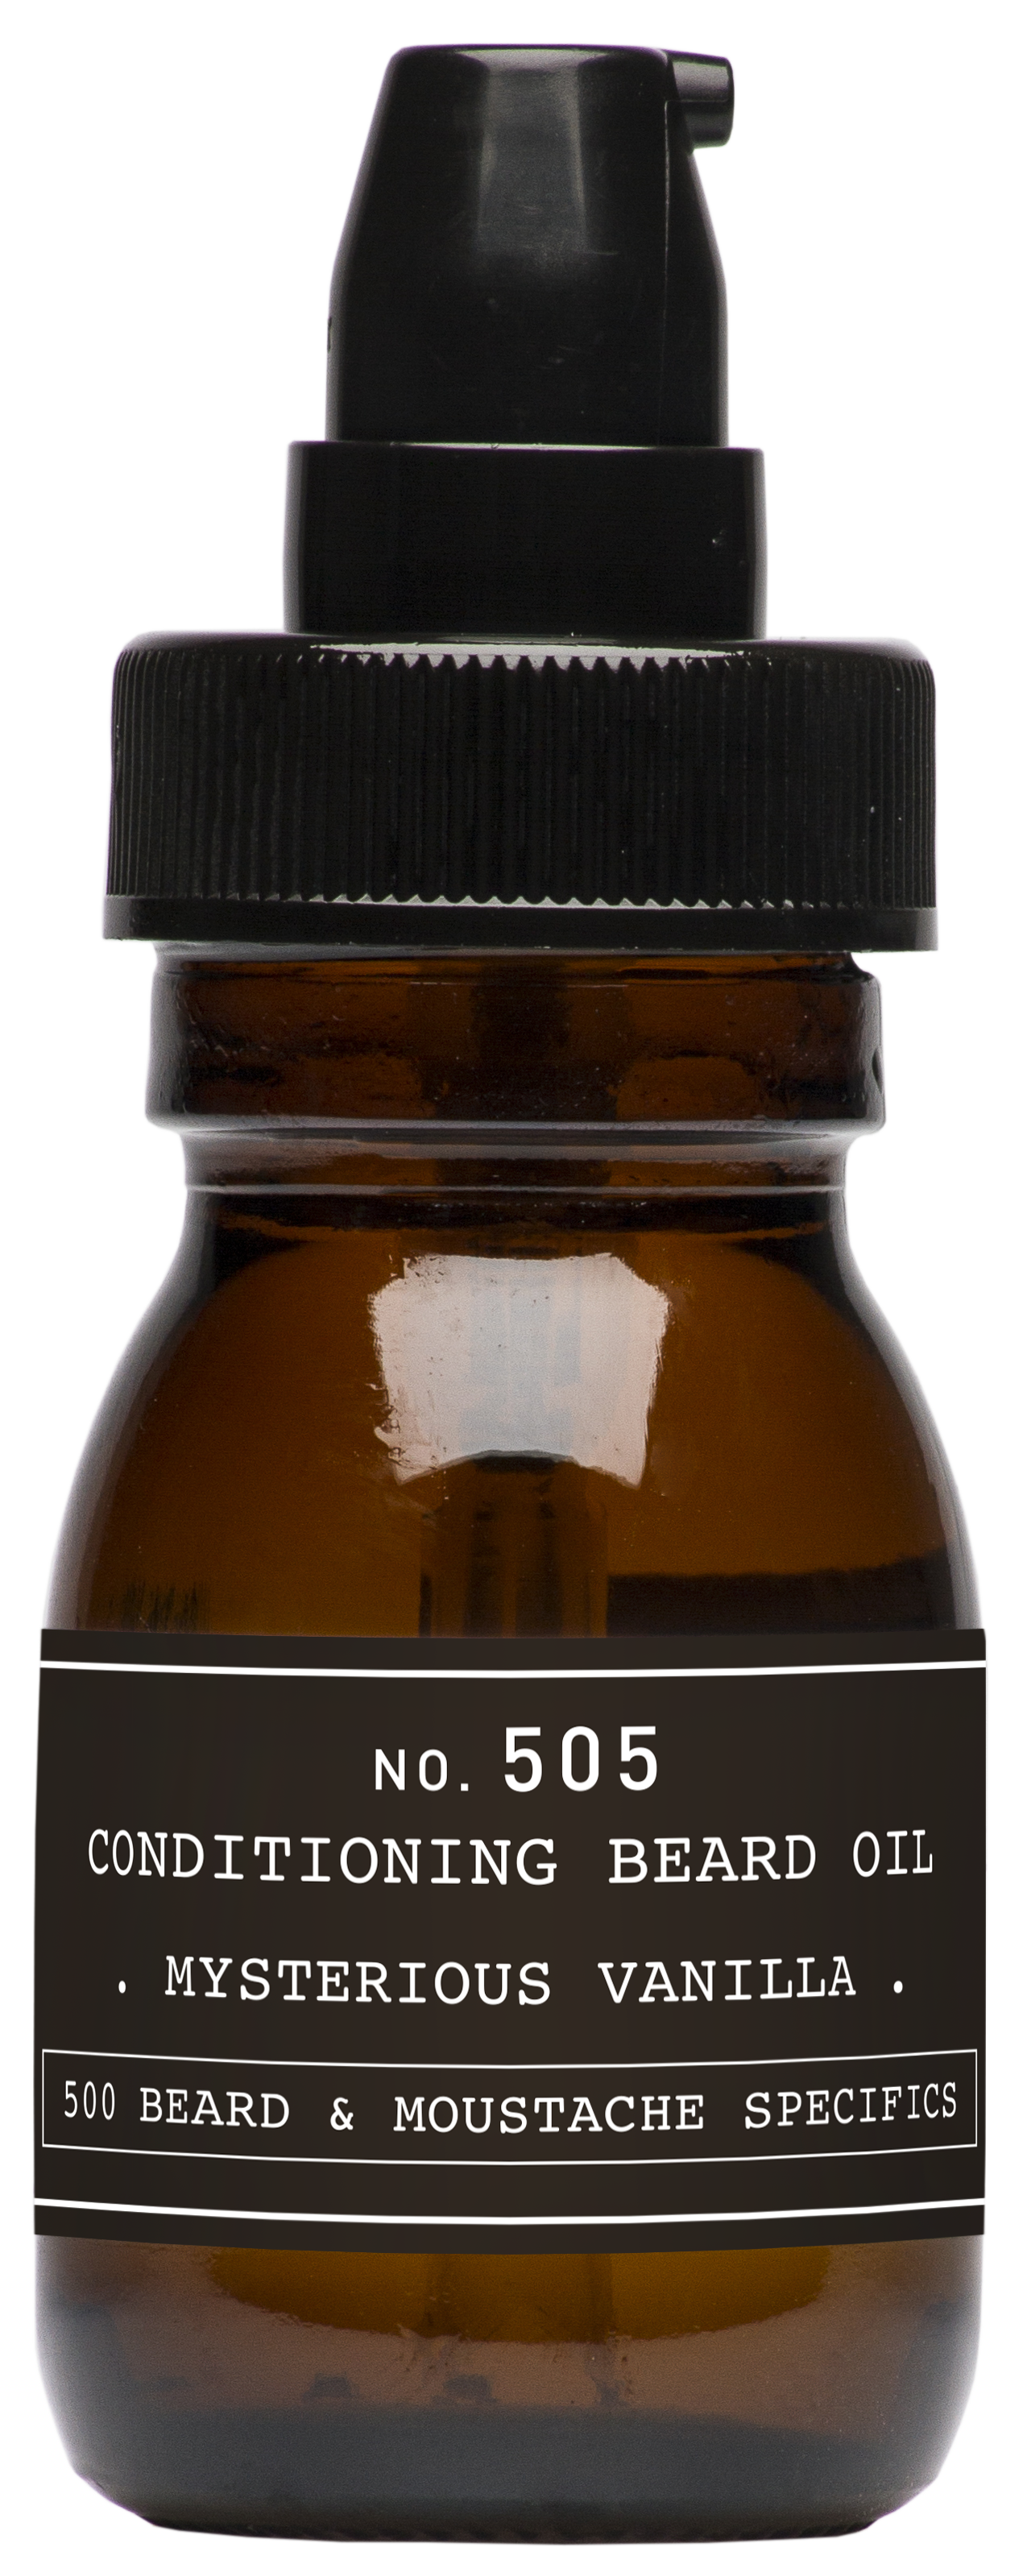 Depot - No. 505 Conditioning Beard Oil  - Mysterious Vanilia